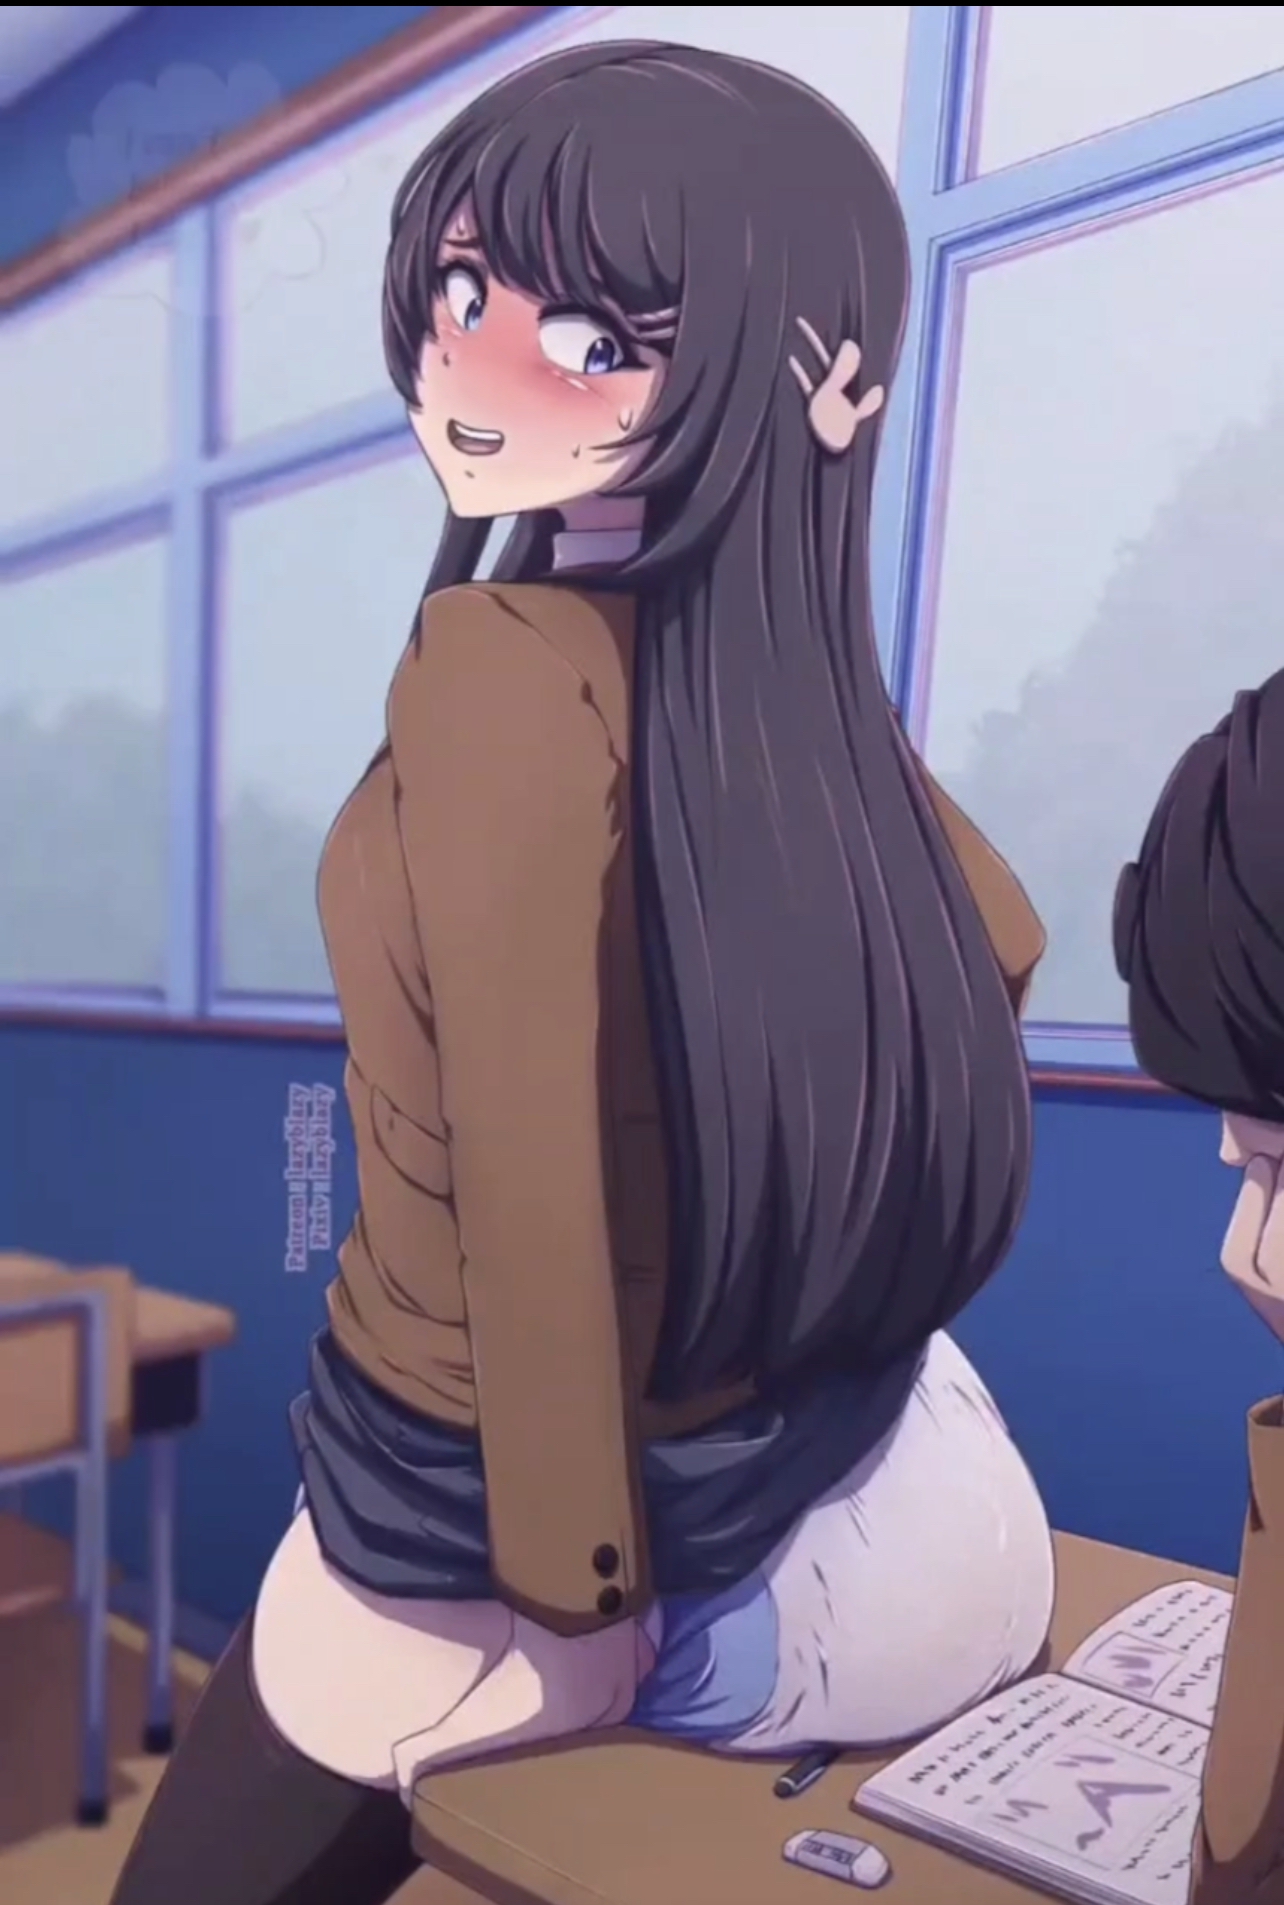 Mai Sakurajima poops her diaper in class (No Audio) - ThisVid.com